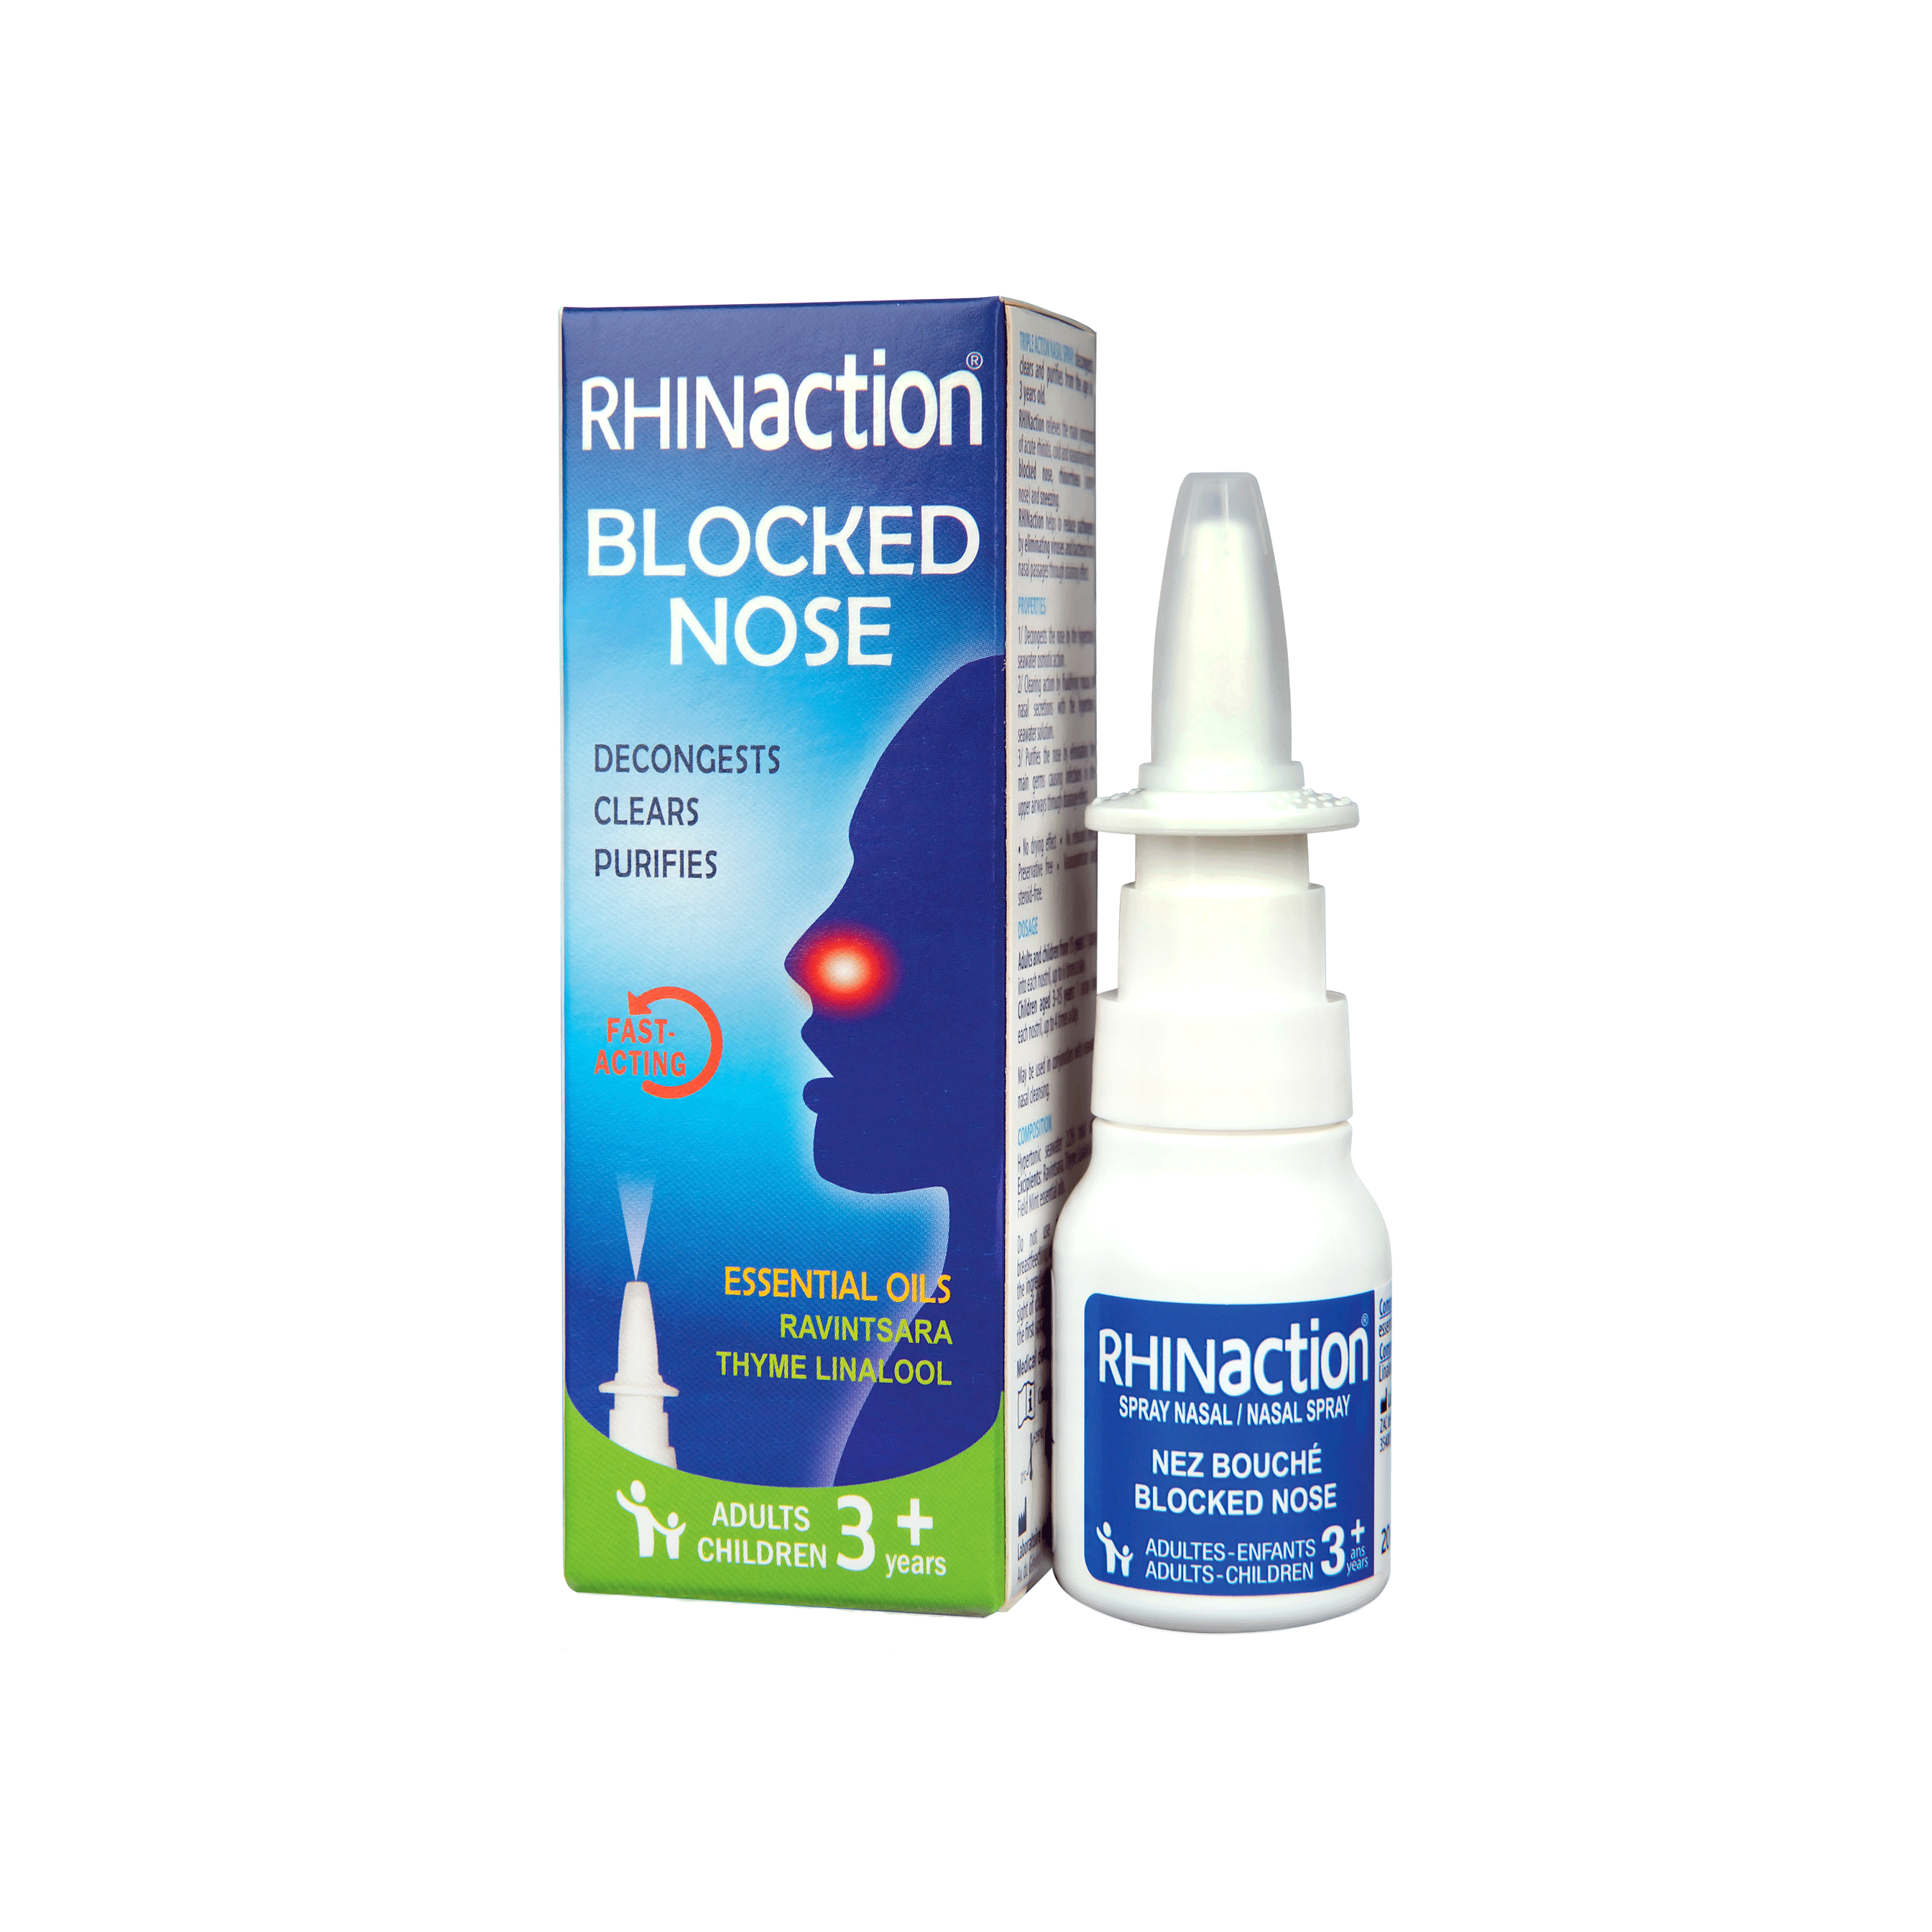 nasal spray for stuffy nose